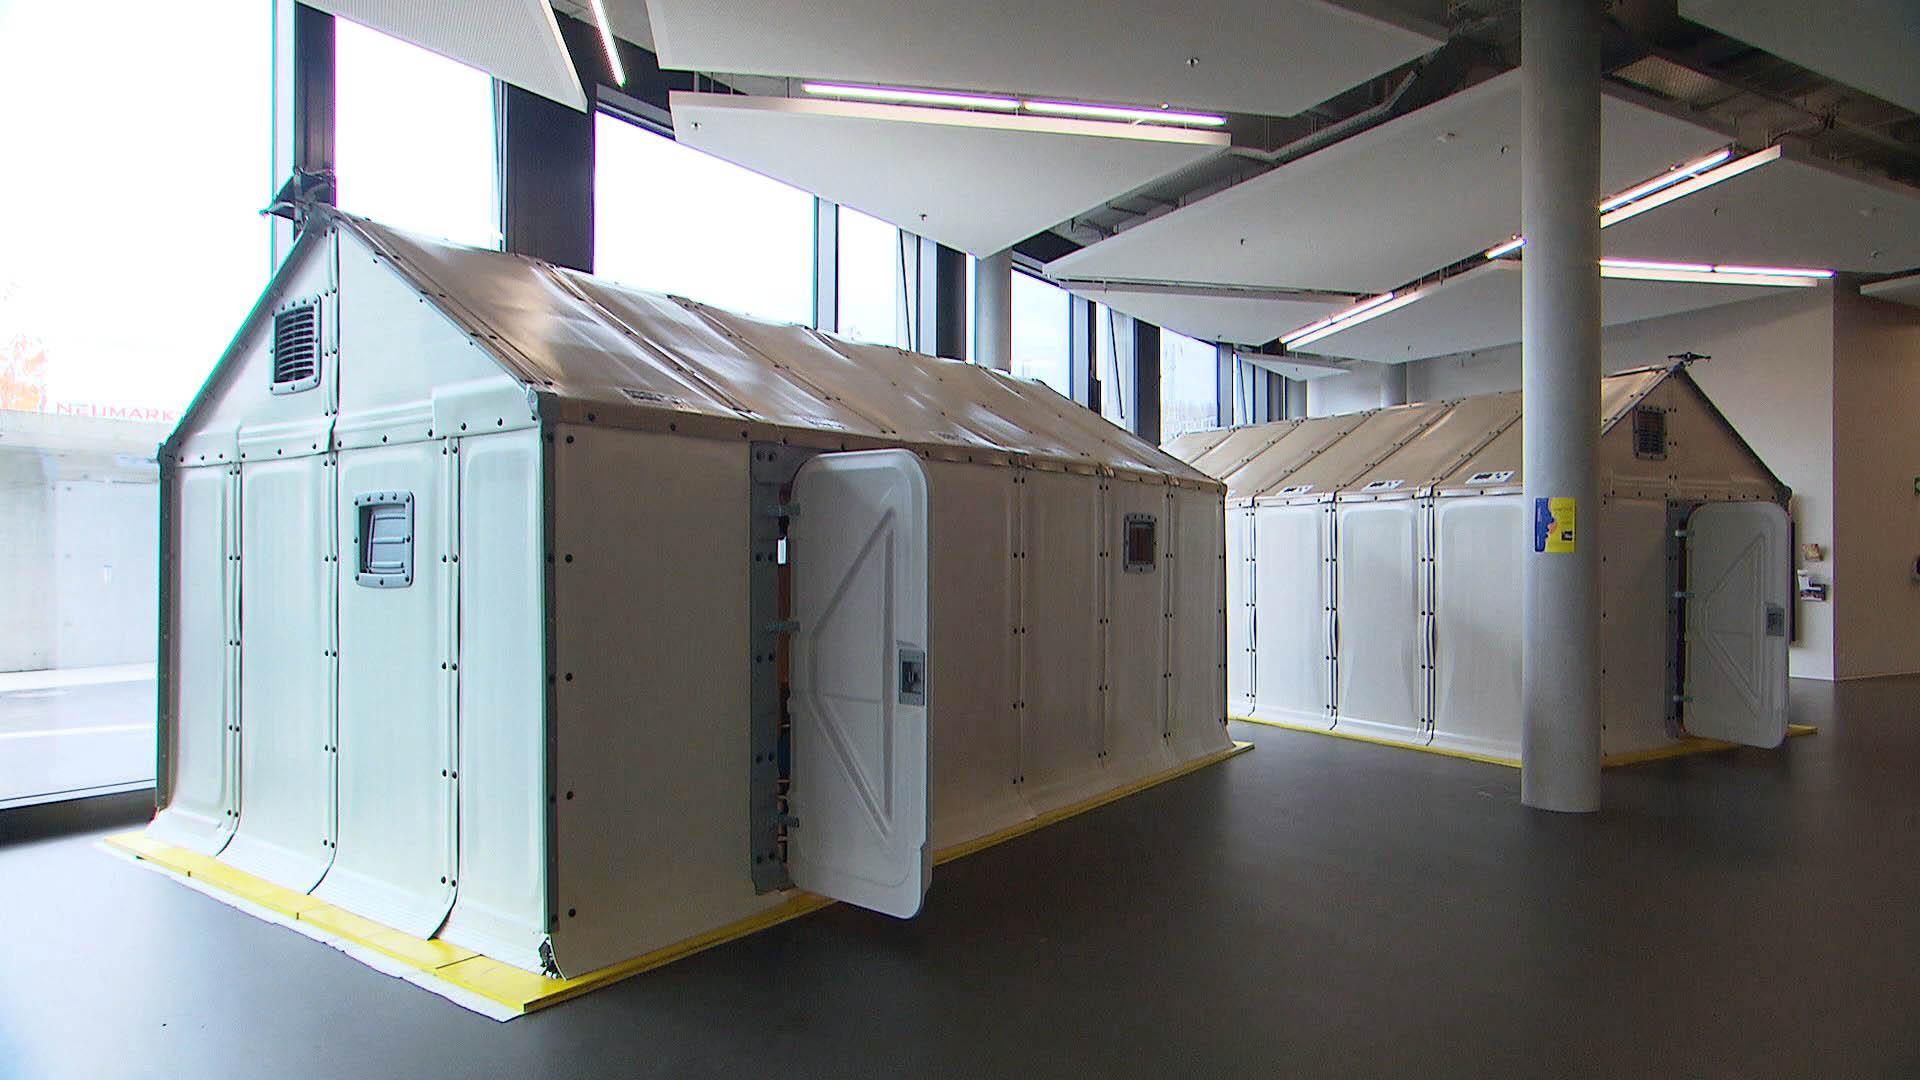 Ikea units for asylum seekers